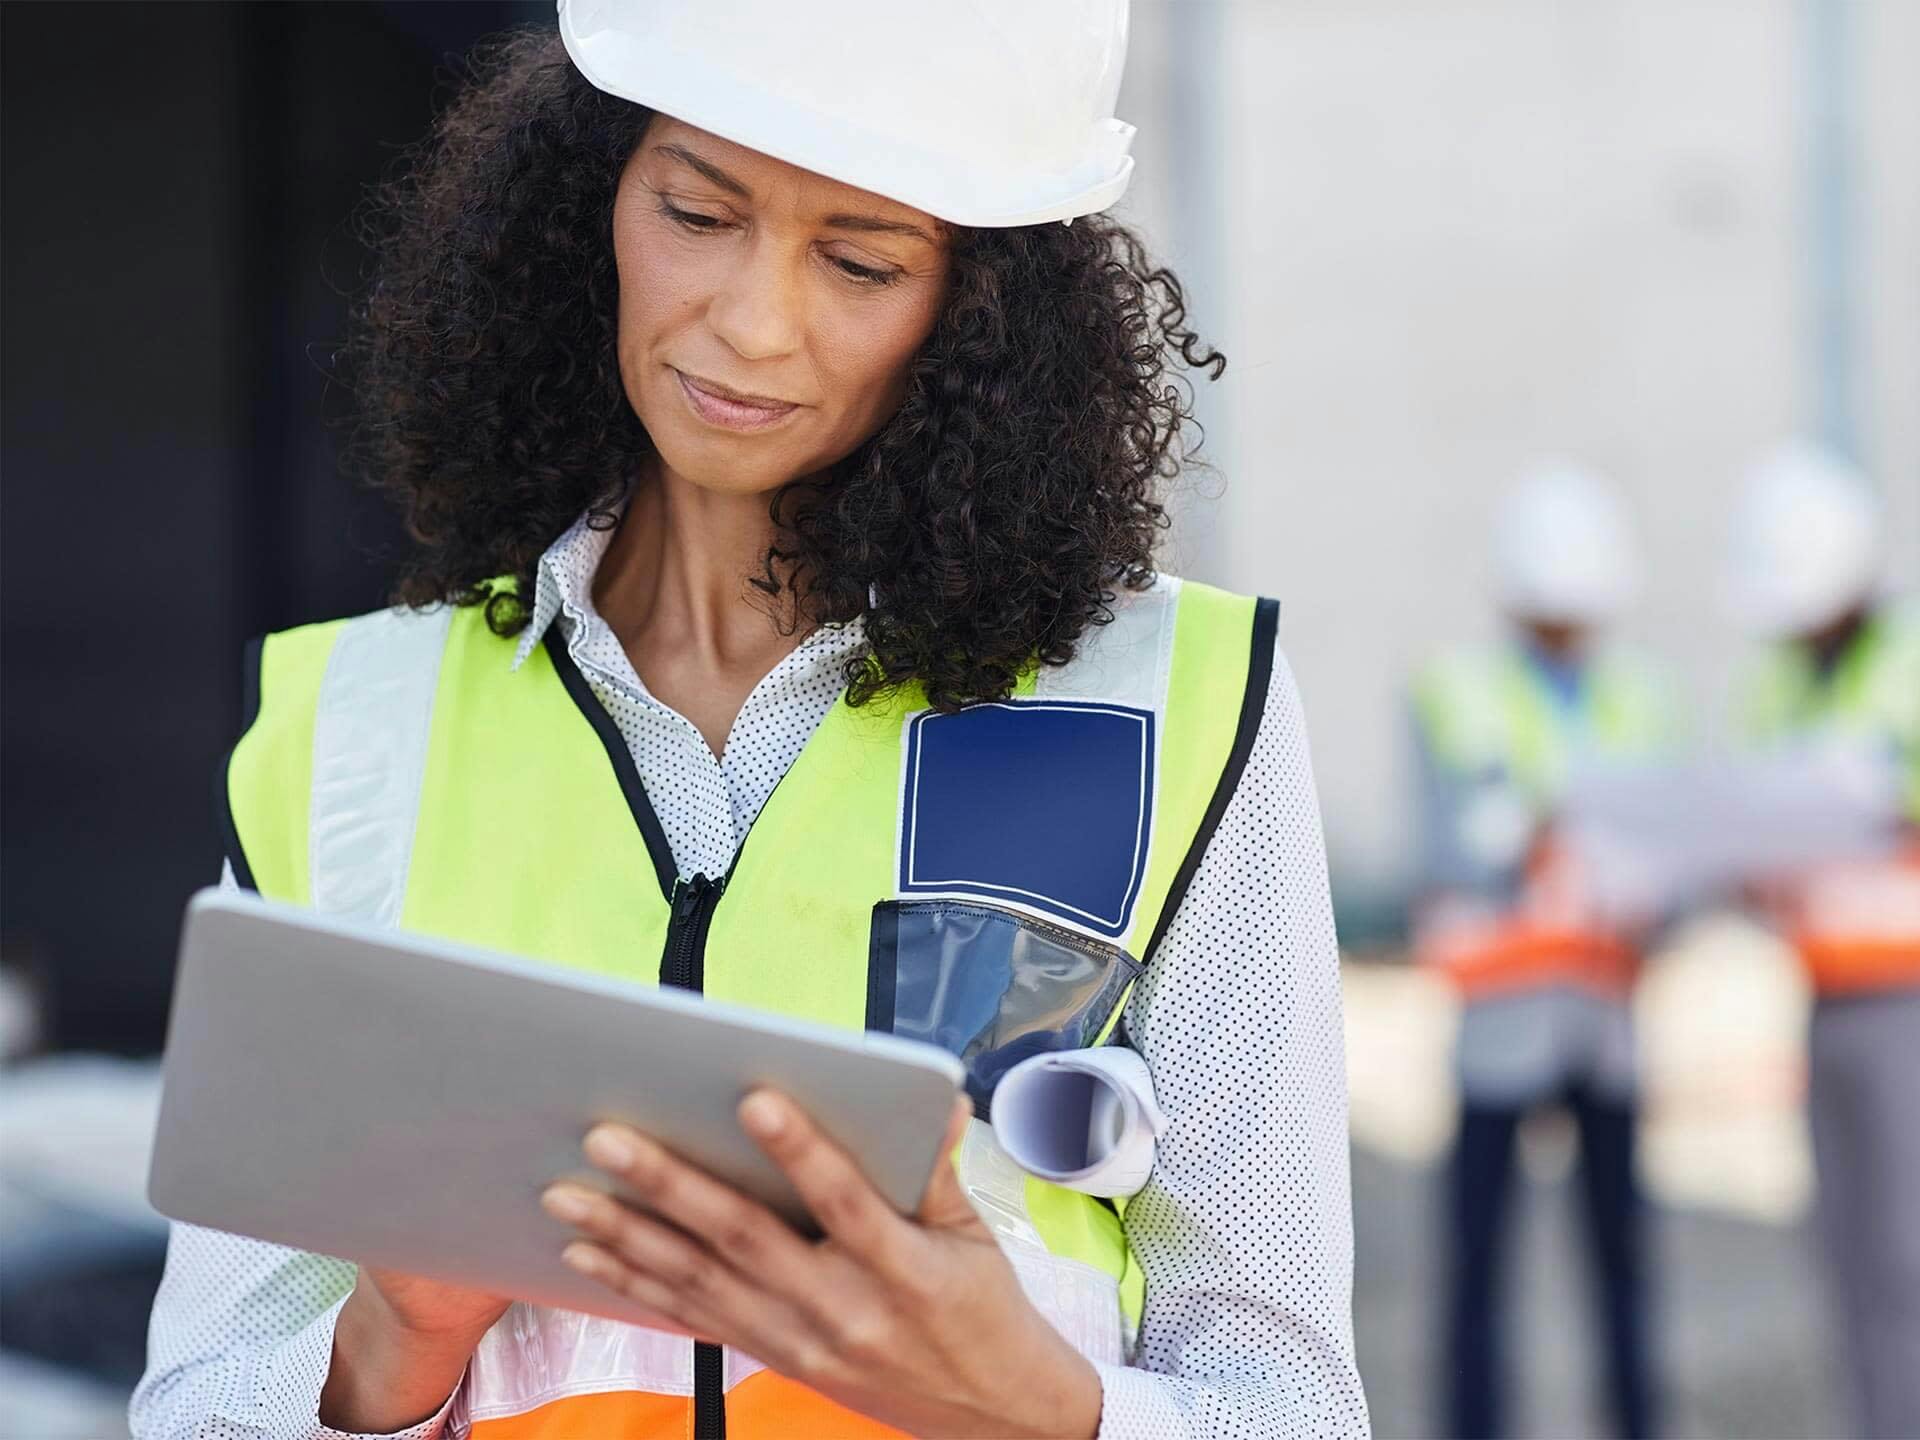 Construction worker using an iPad on a jobsite